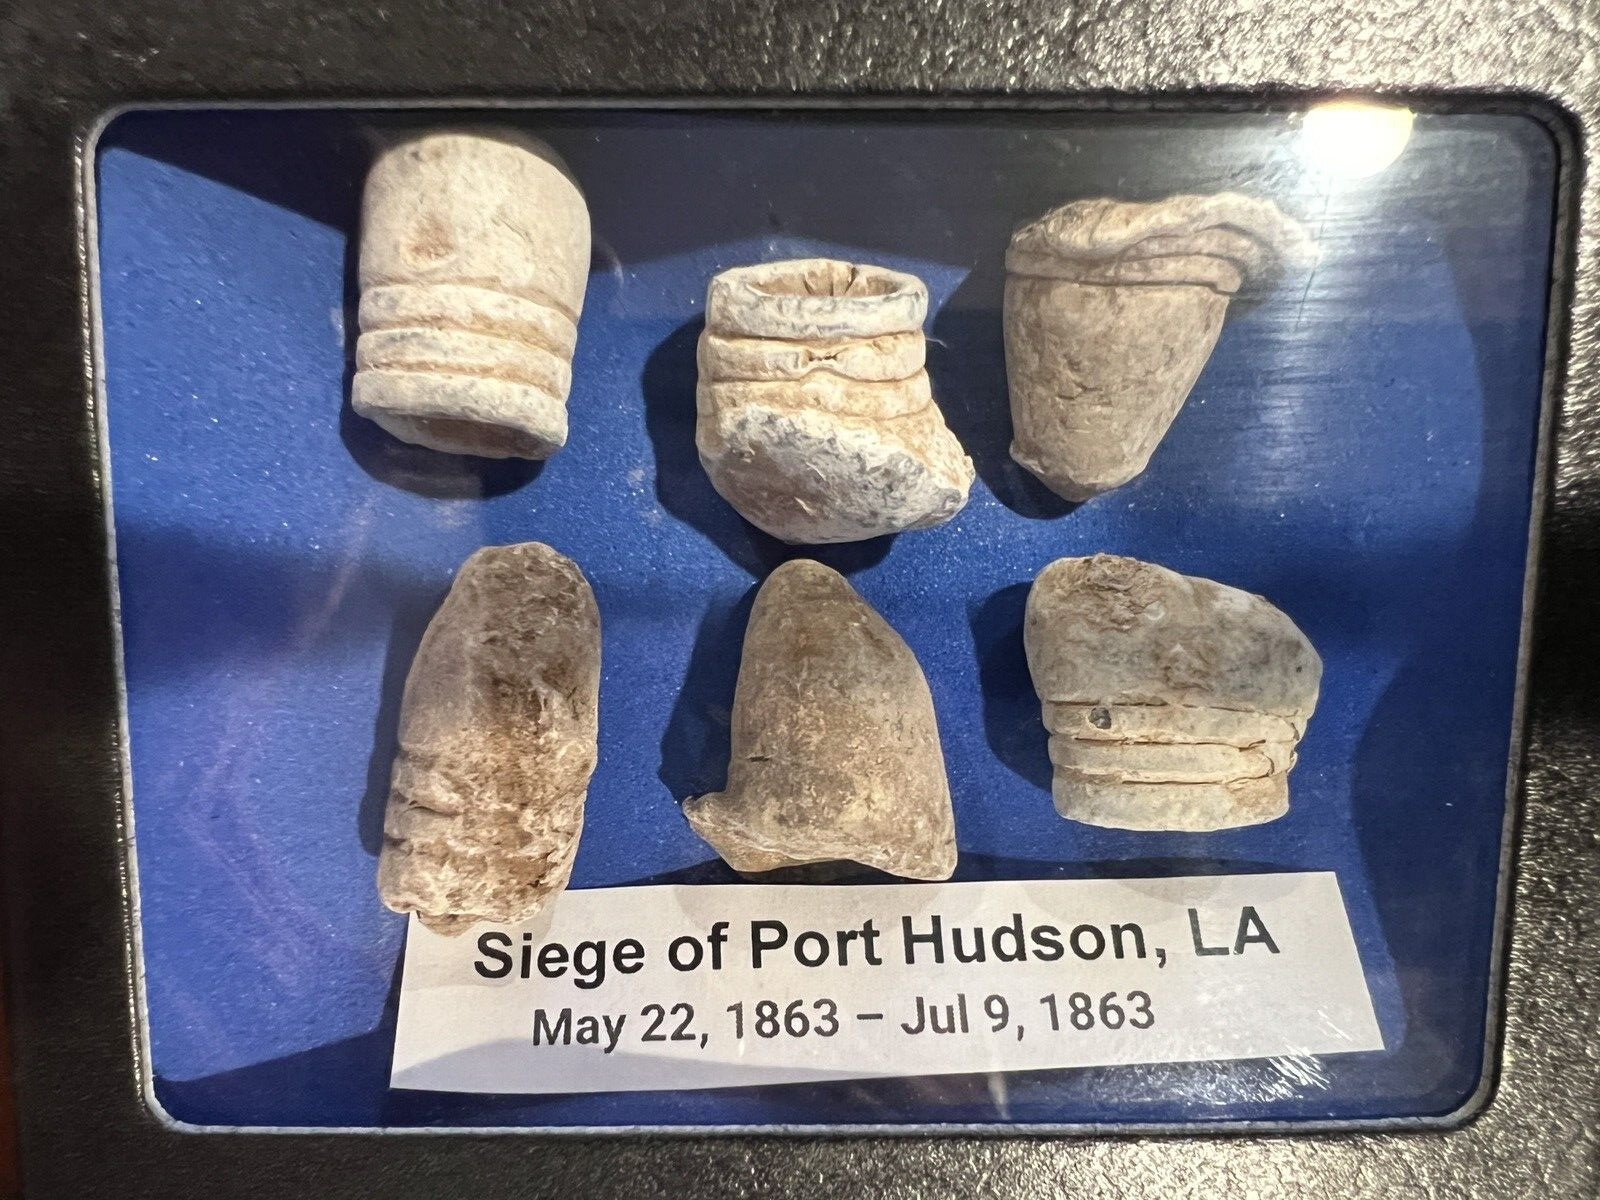 Civil War .69 Caliber Bullets Artifacts dug at Port Hudson